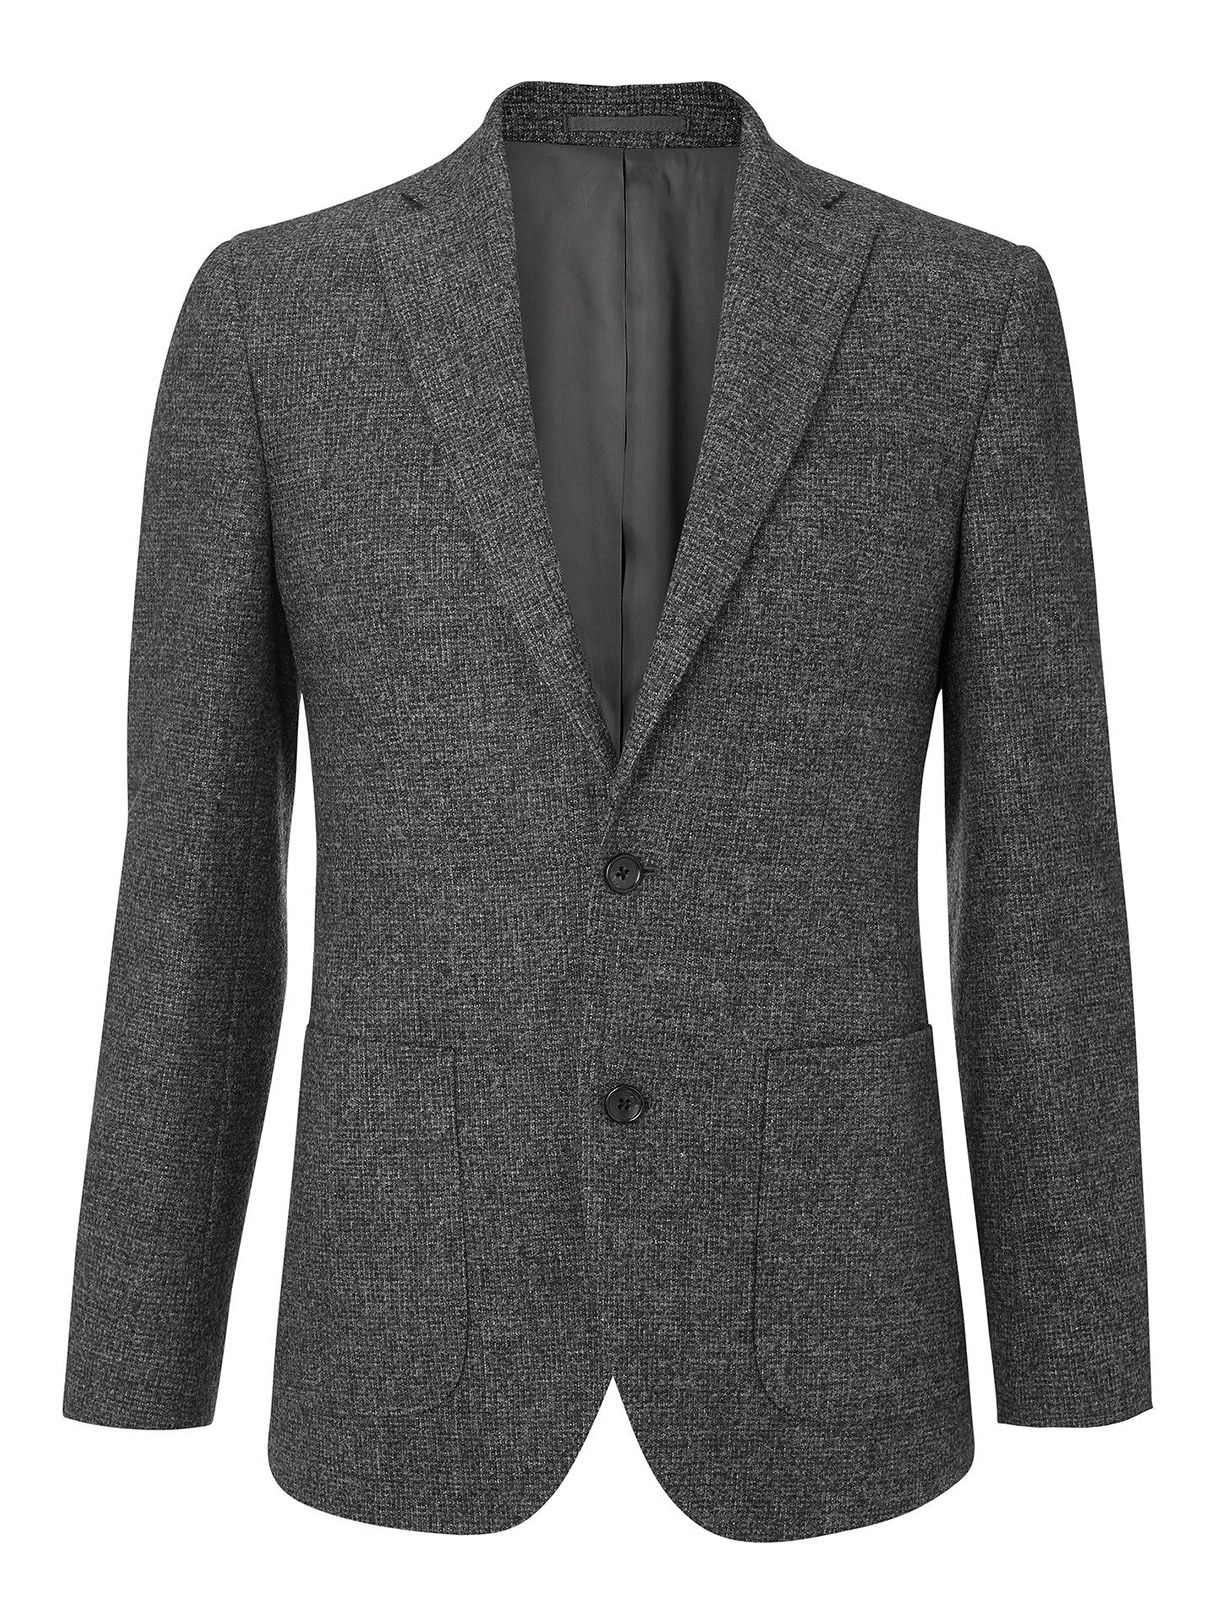 John Lewis & Partners grey Herringbone Tailored Suit Jacket